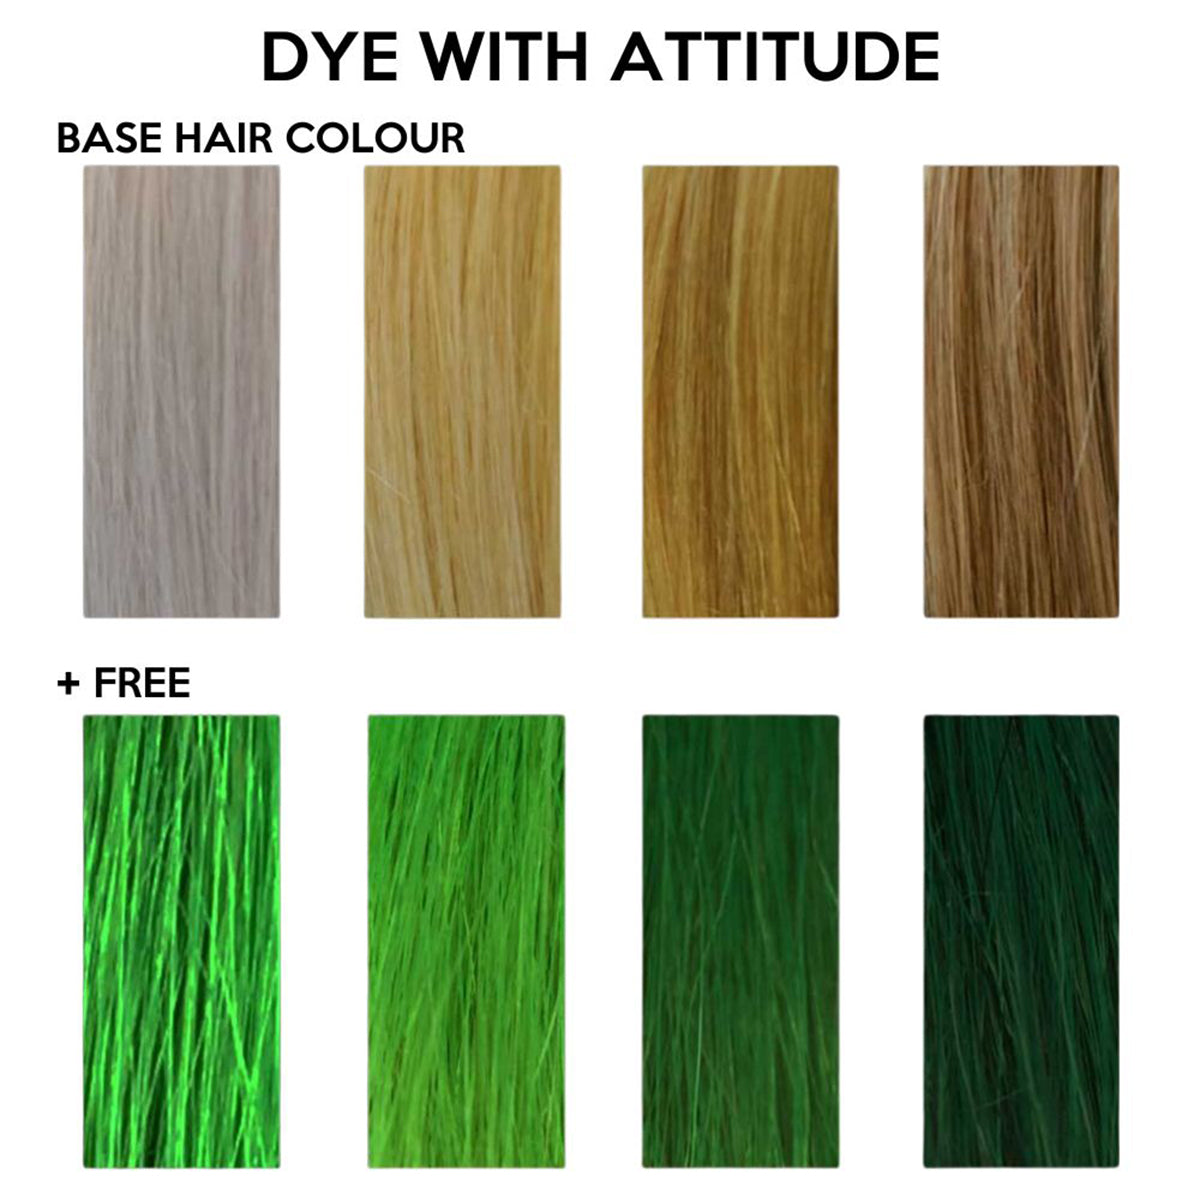 FREE UV GREEN - Attitude Hair Dye - 135ml